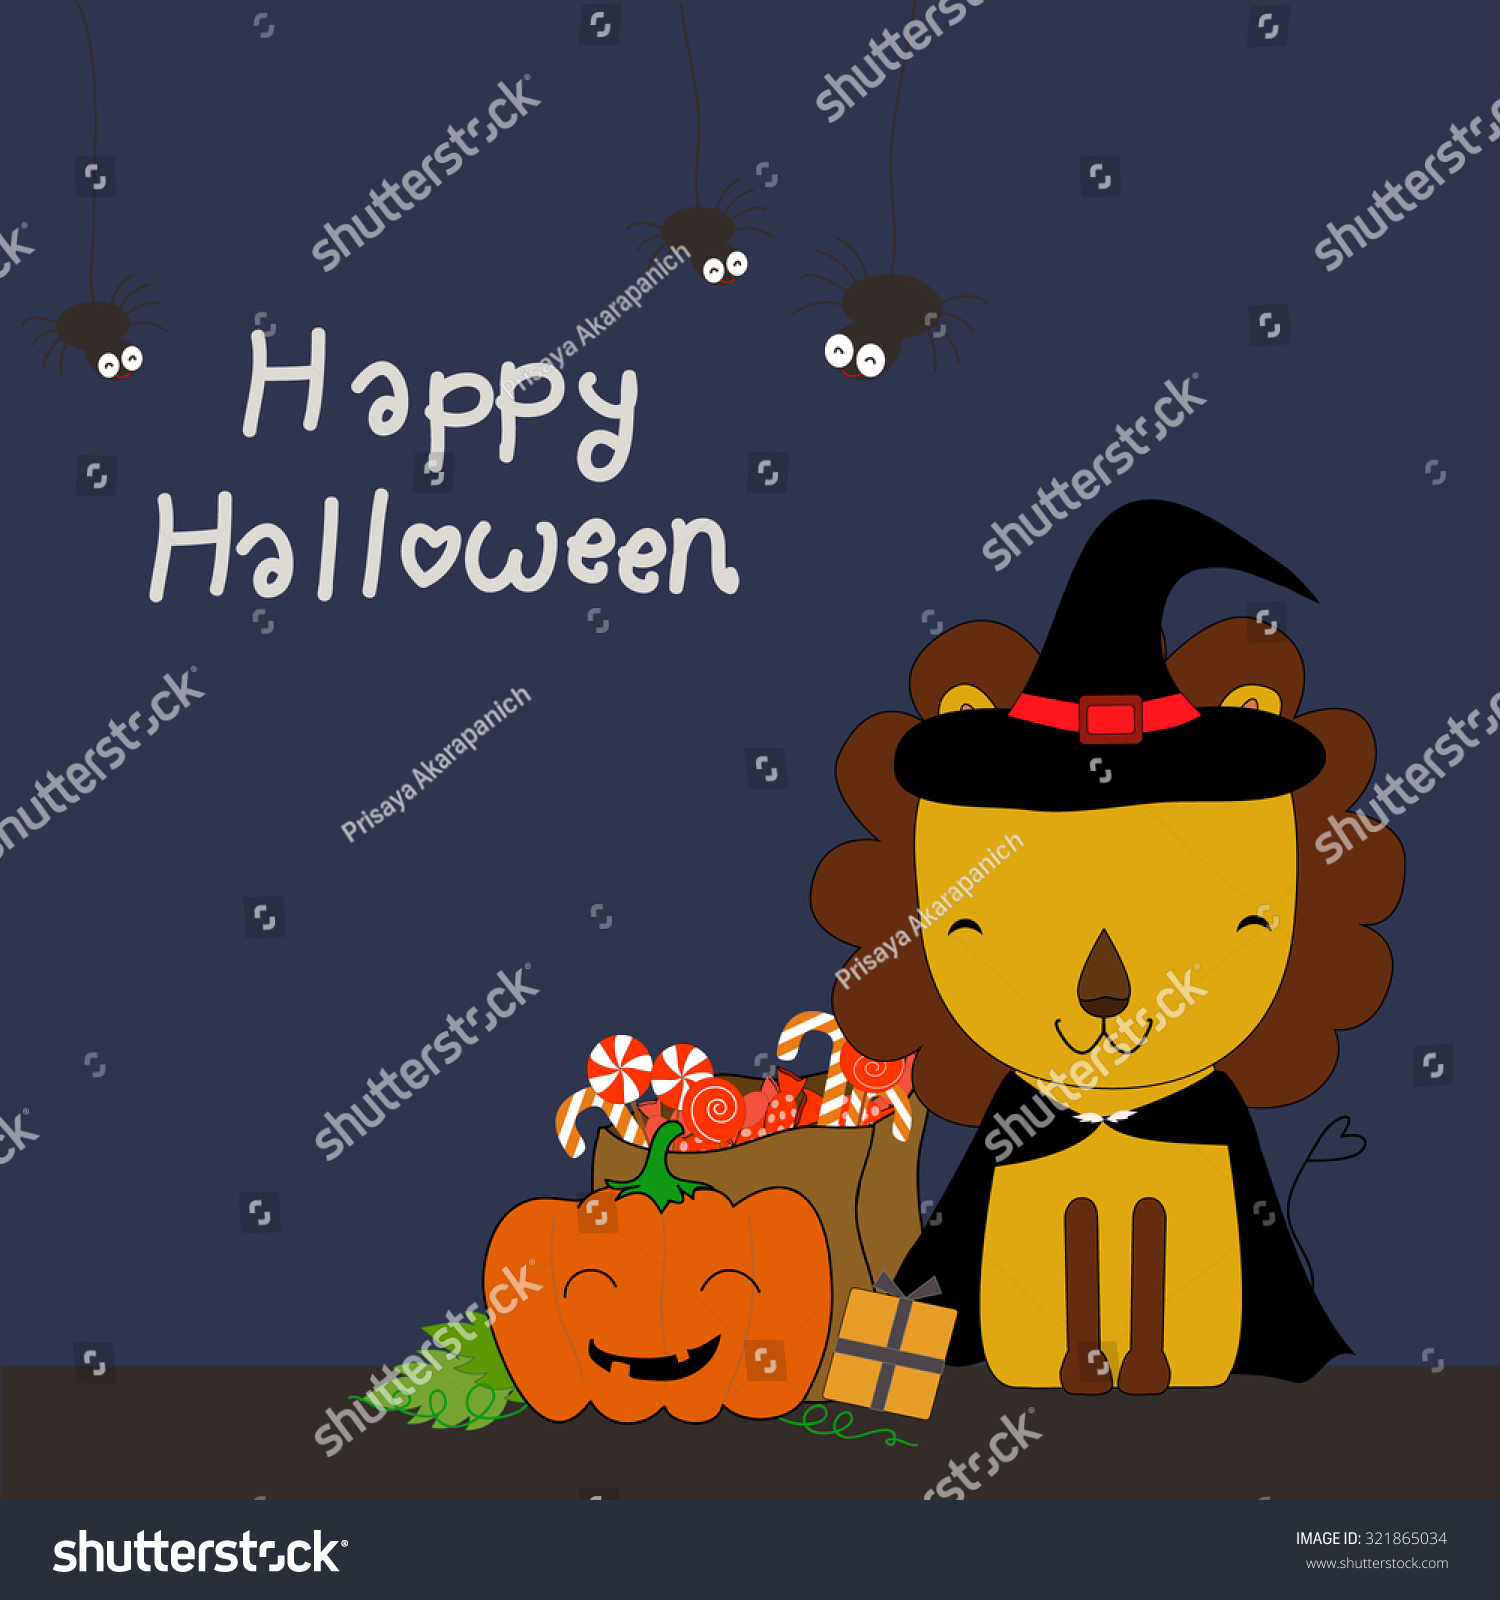 Cute Lion Halloween Card - Royalty Free Stock Vector 321865034 - Avopix.com